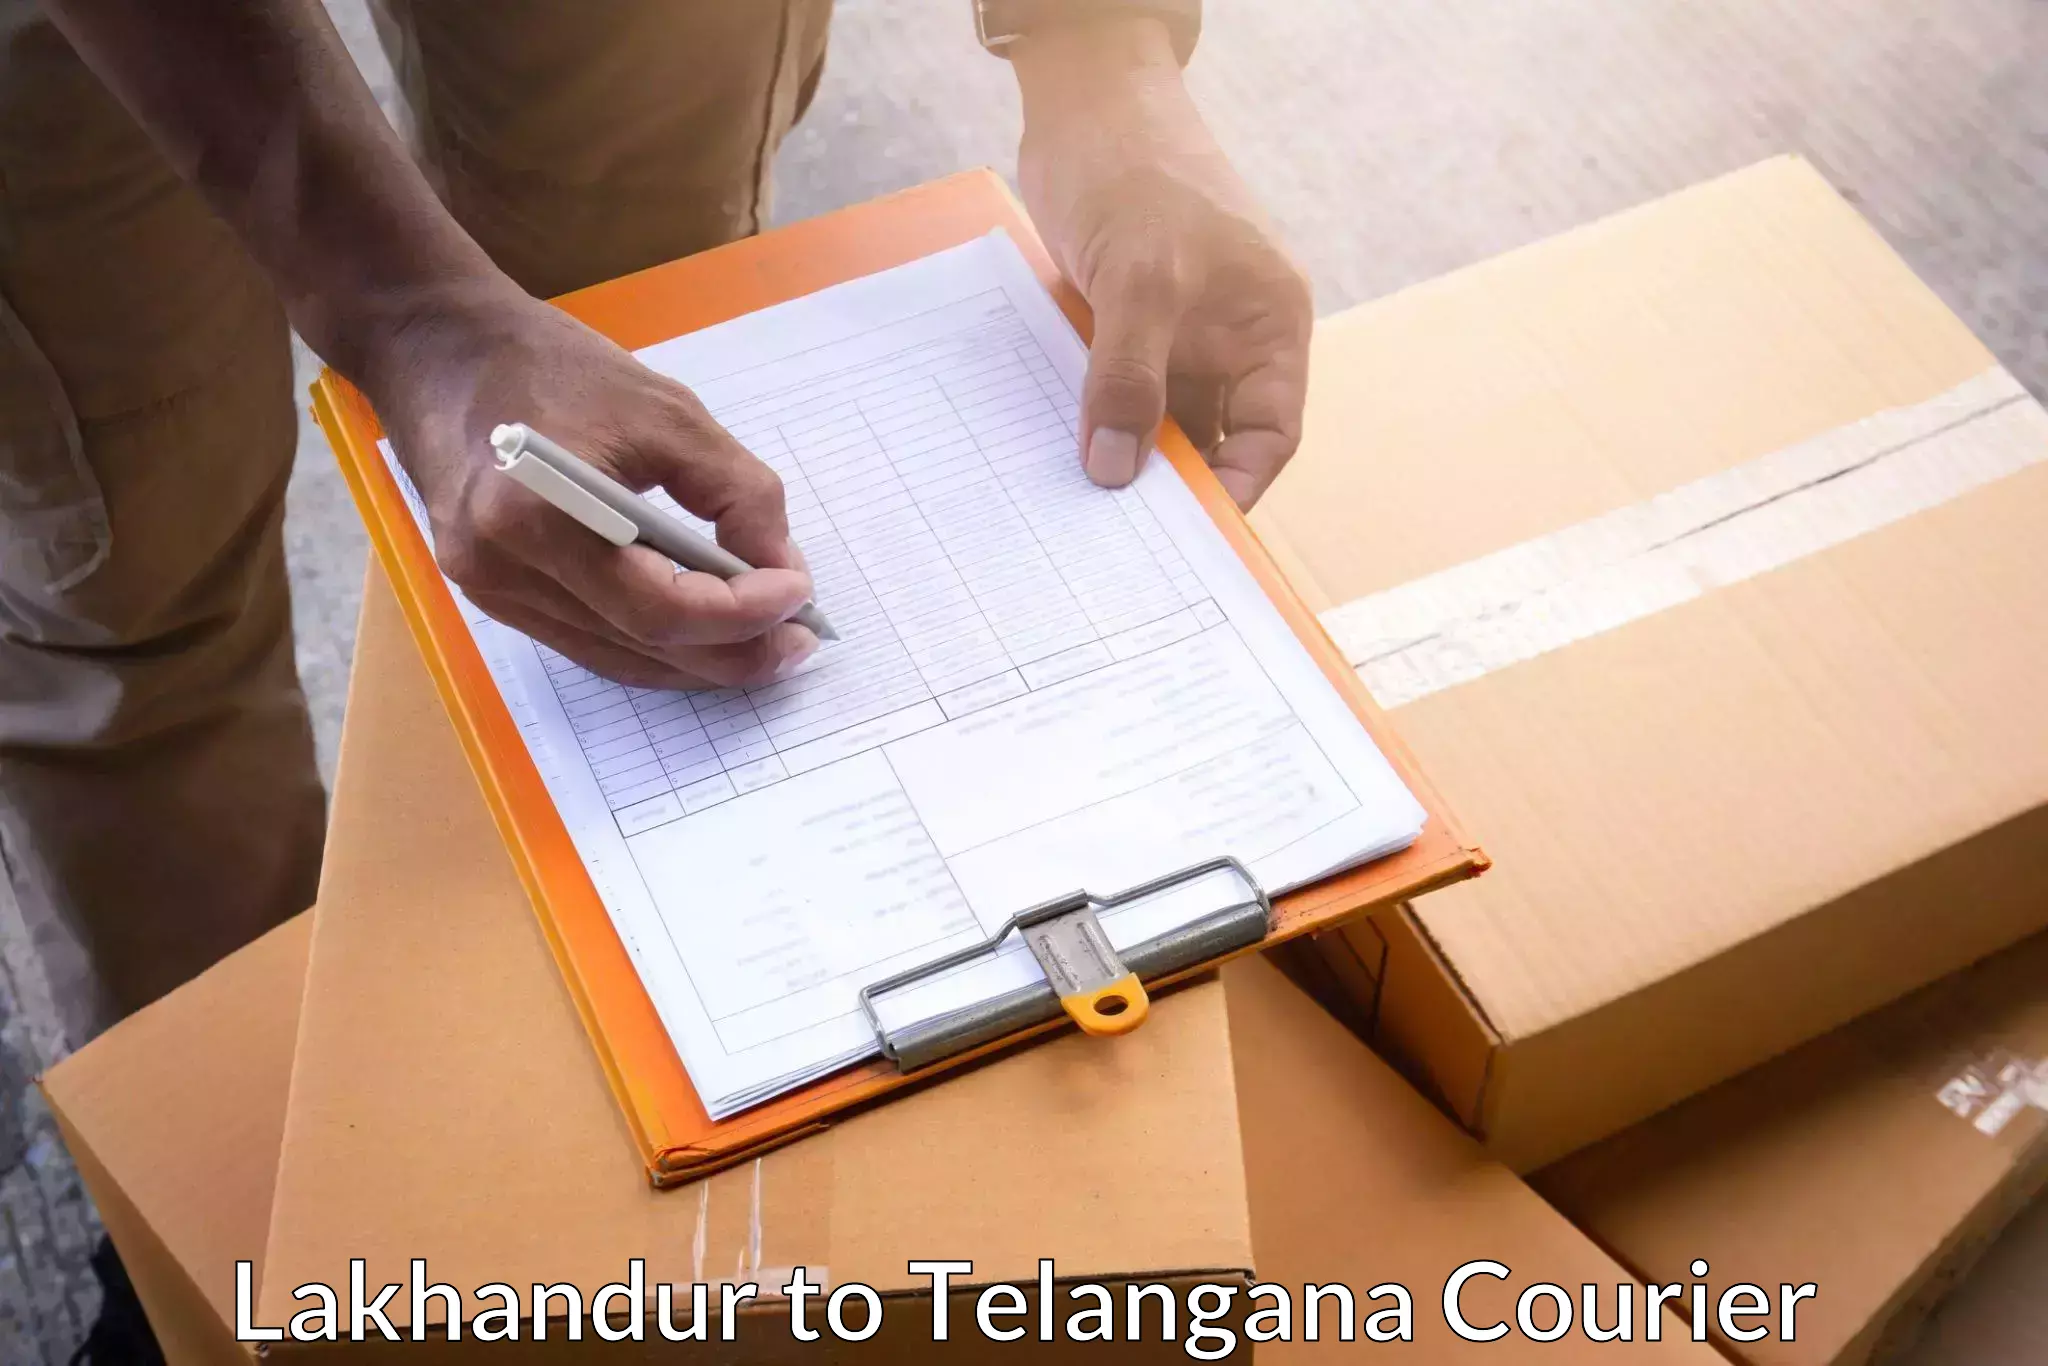 Professional courier handling Lakhandur to Yellareddy